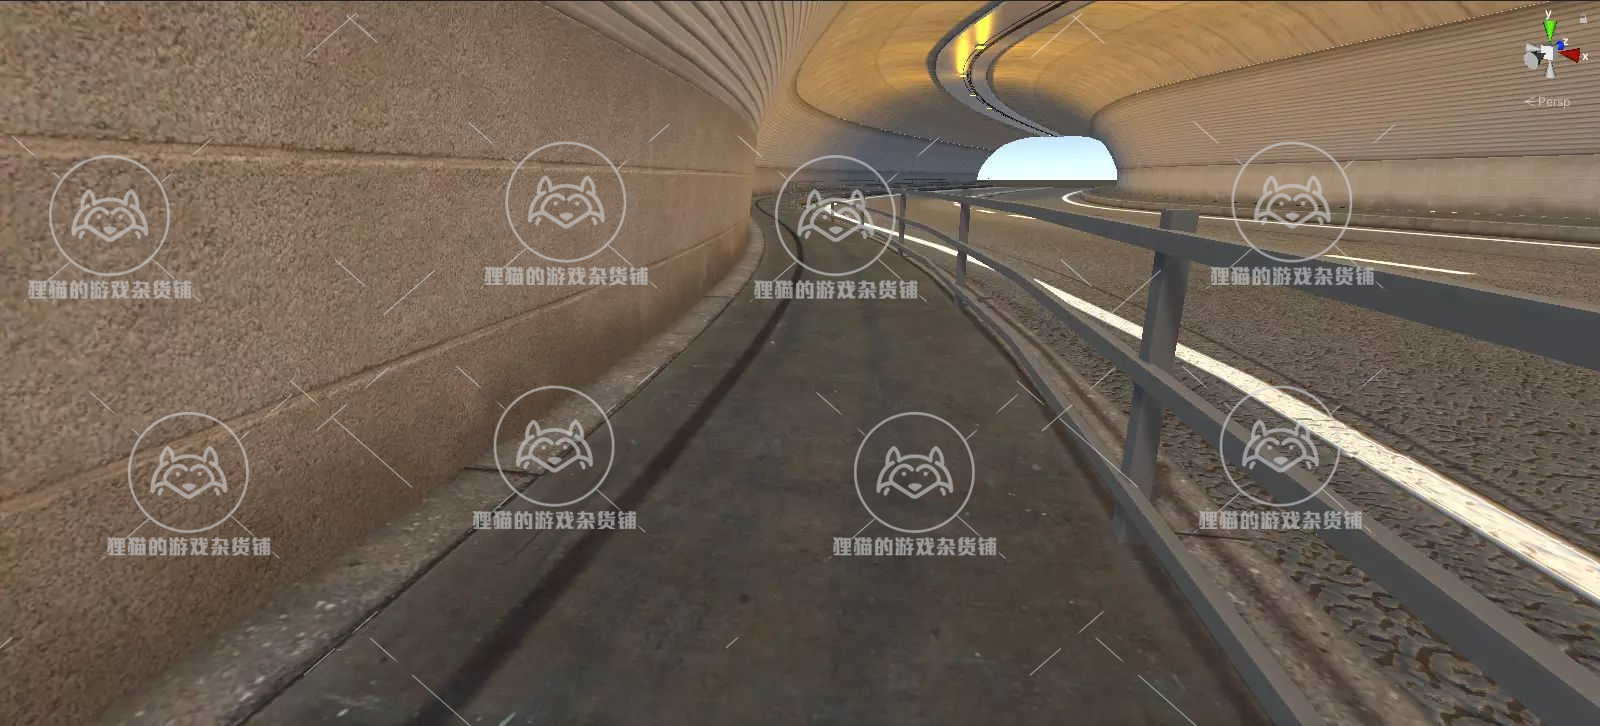 Unity Tunnels Maker 1.0 包更新 隧道创建工具 - 图3